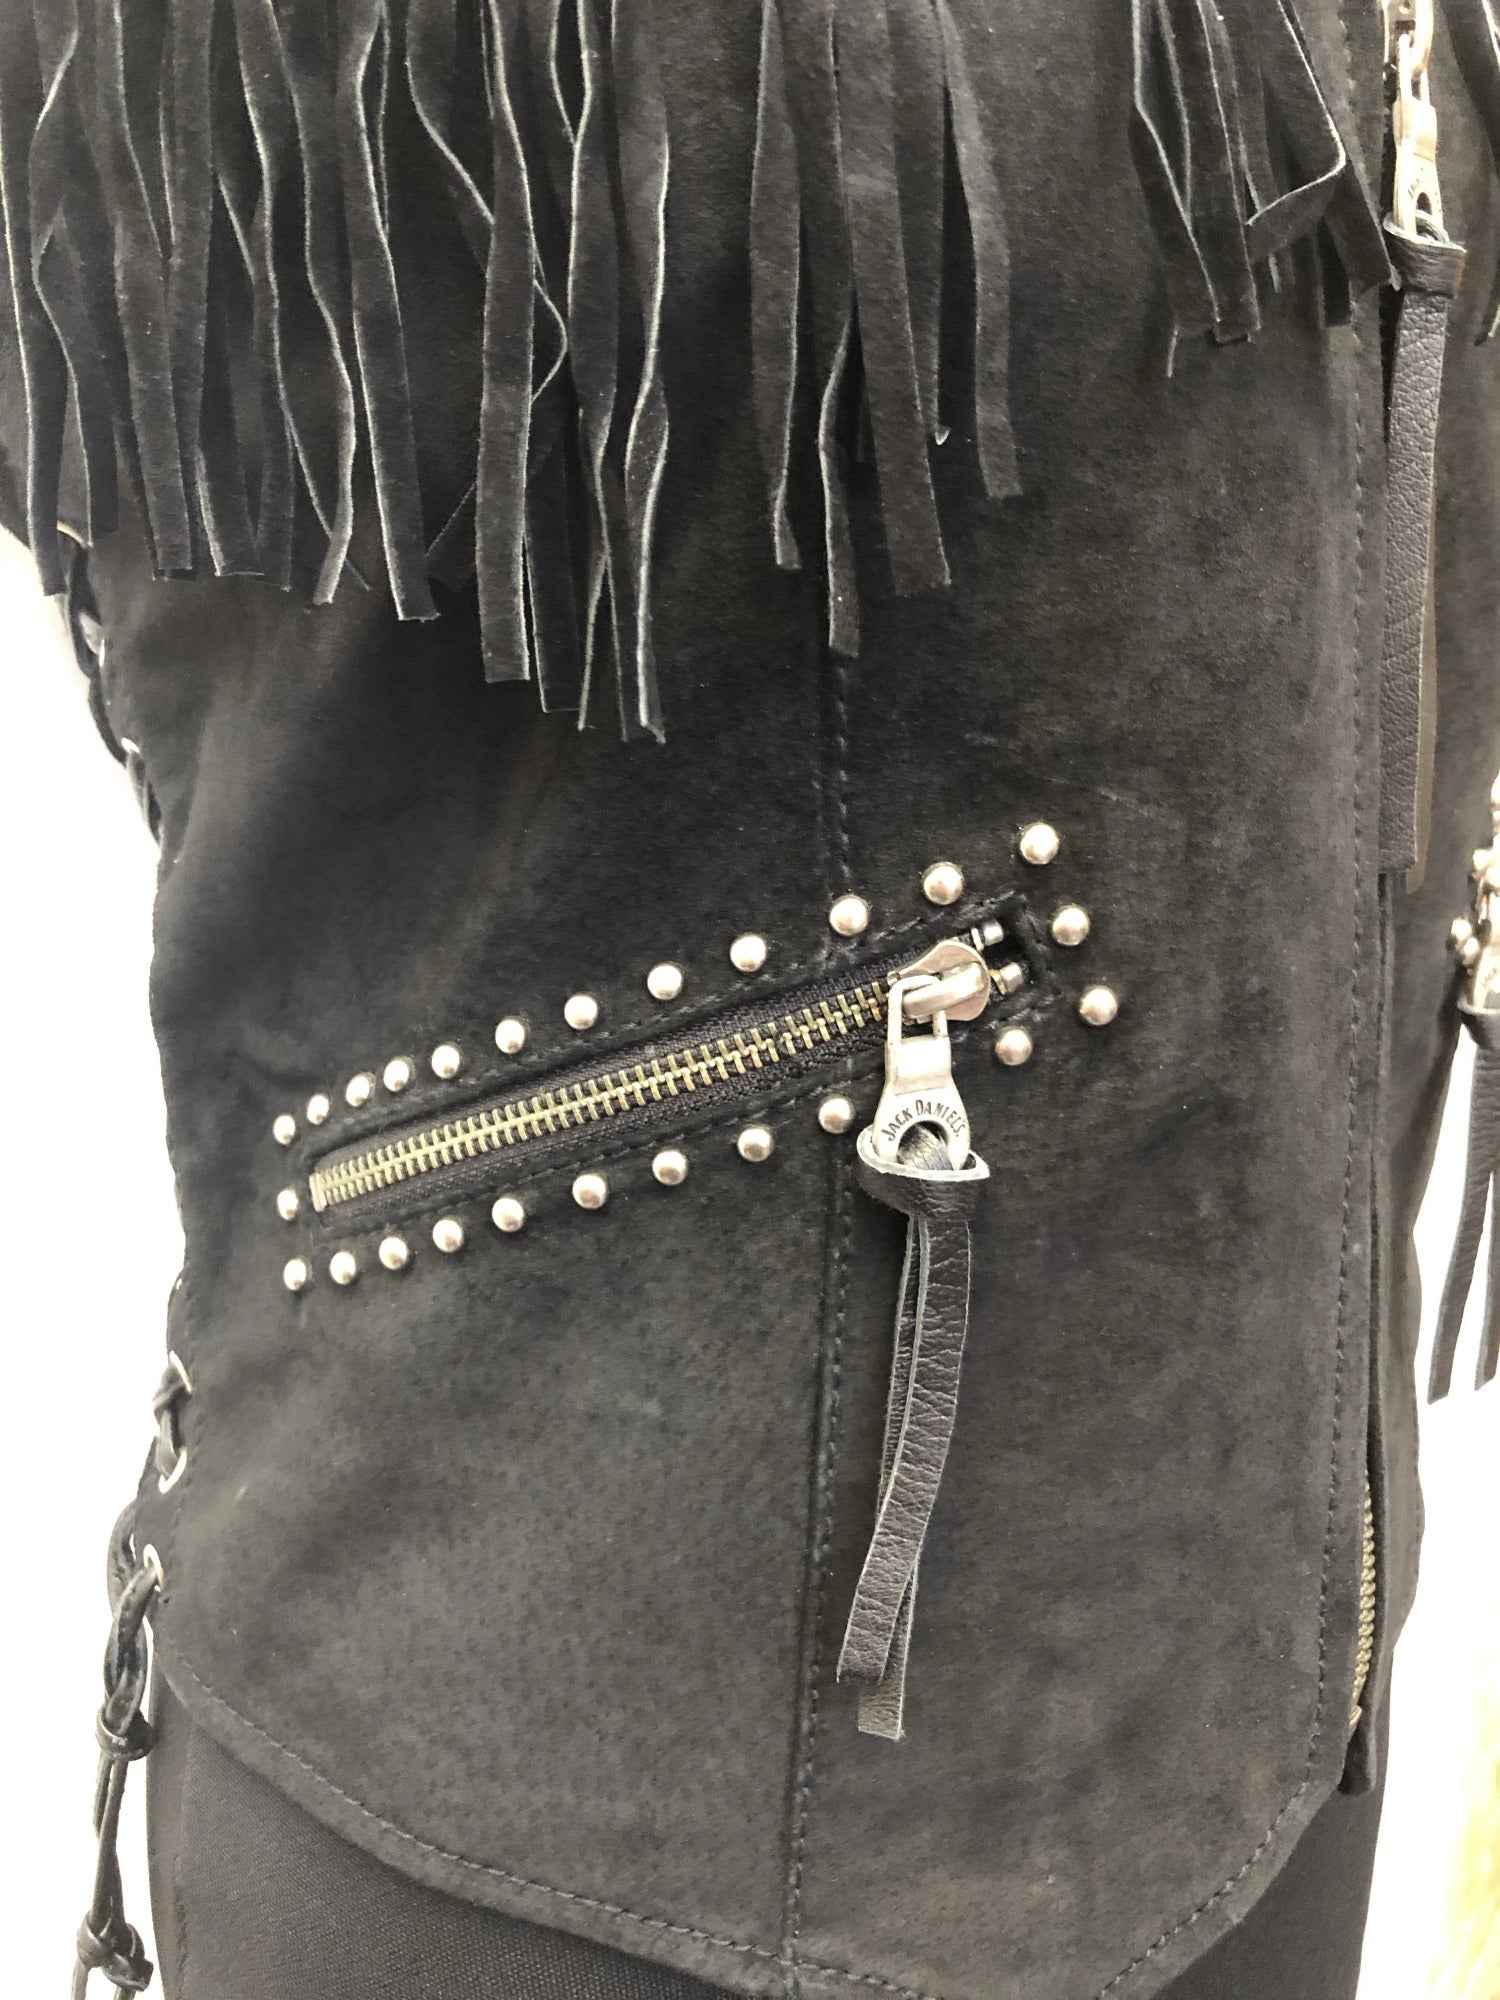 YKK Zip  waistcoat  top  tee  t-shirt  suede fringing  suede  stud detail  womens  Logo design  logo  leather  Jack Daniels  Black